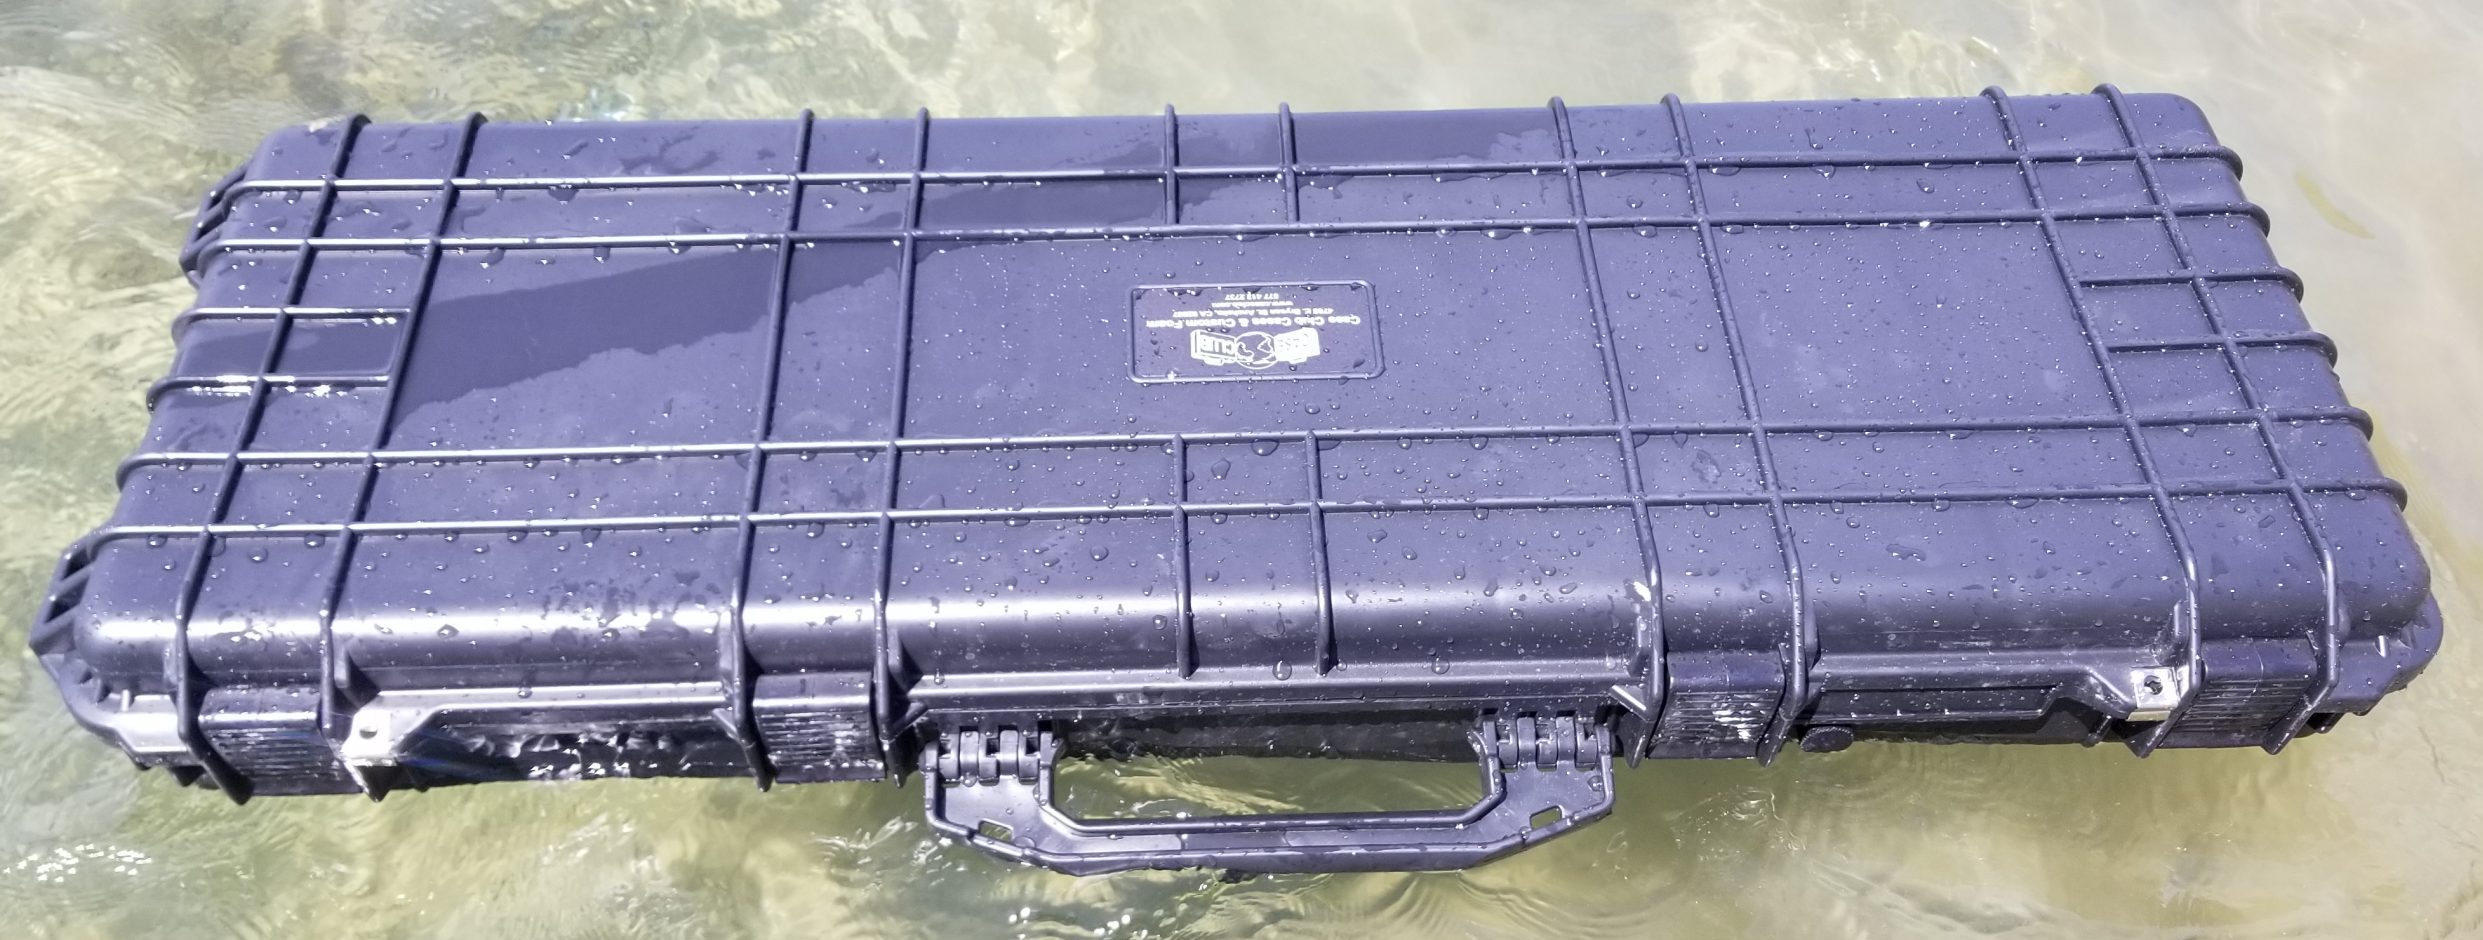 Hard Case Rifle Shotgun Carry Single Gun Storage Box Padded Tactical Hunting New 